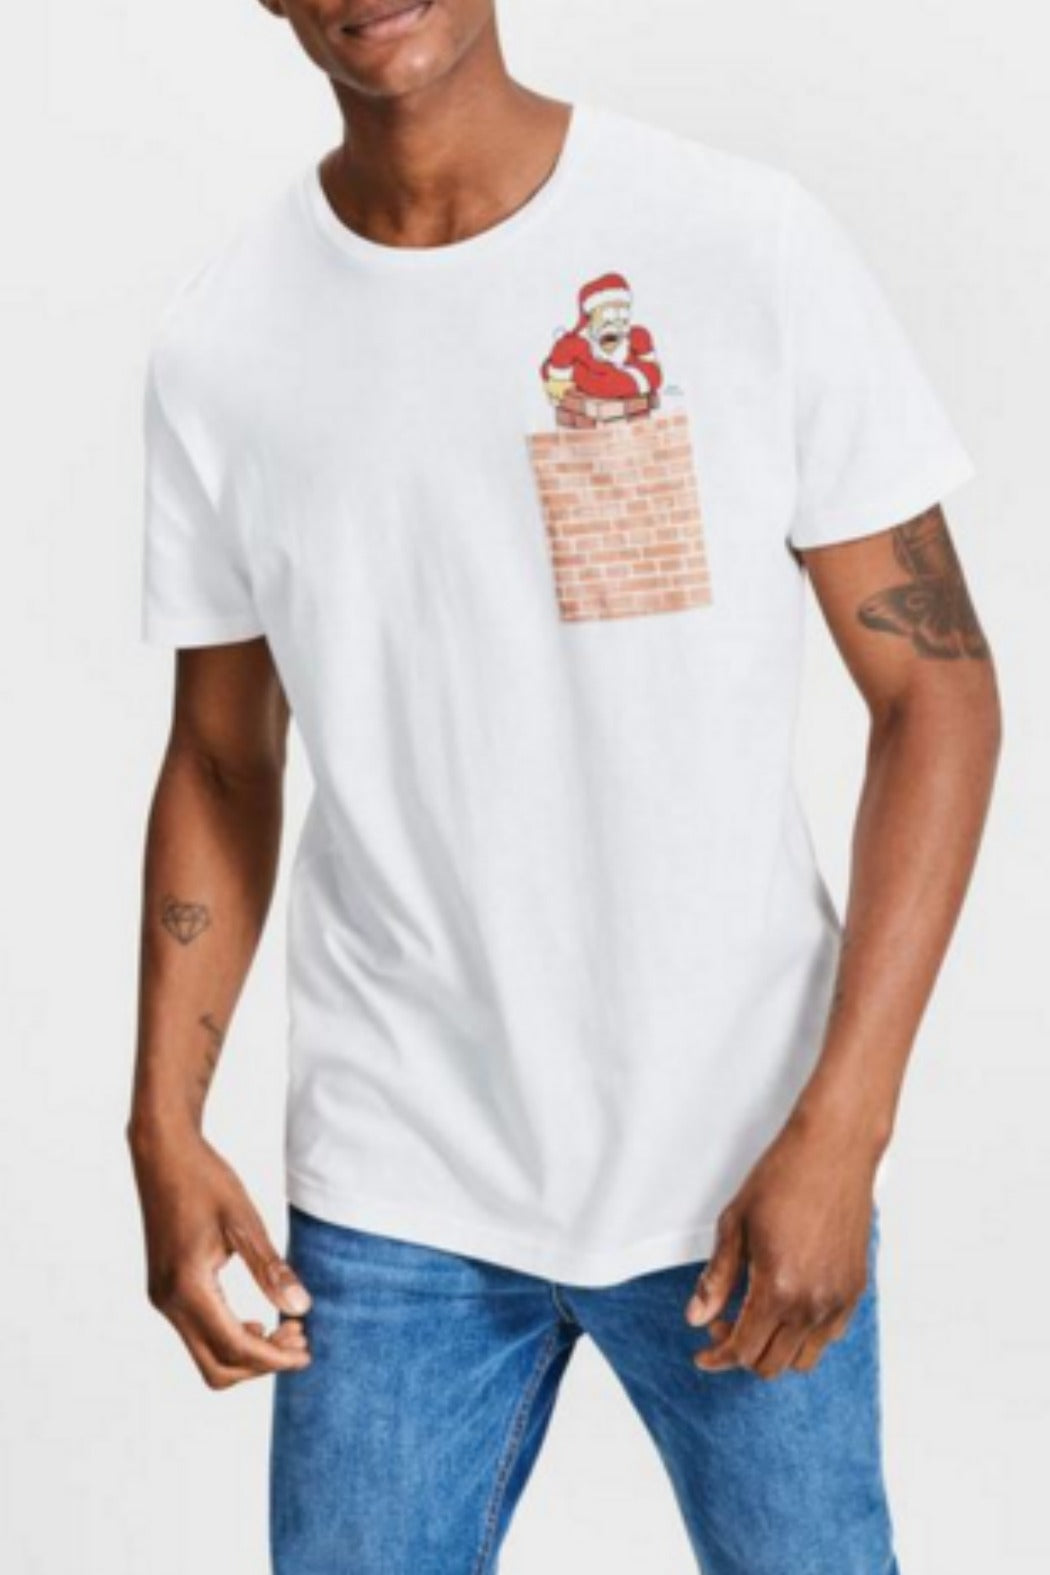 The Simpsons Original Christmas T-Shirt